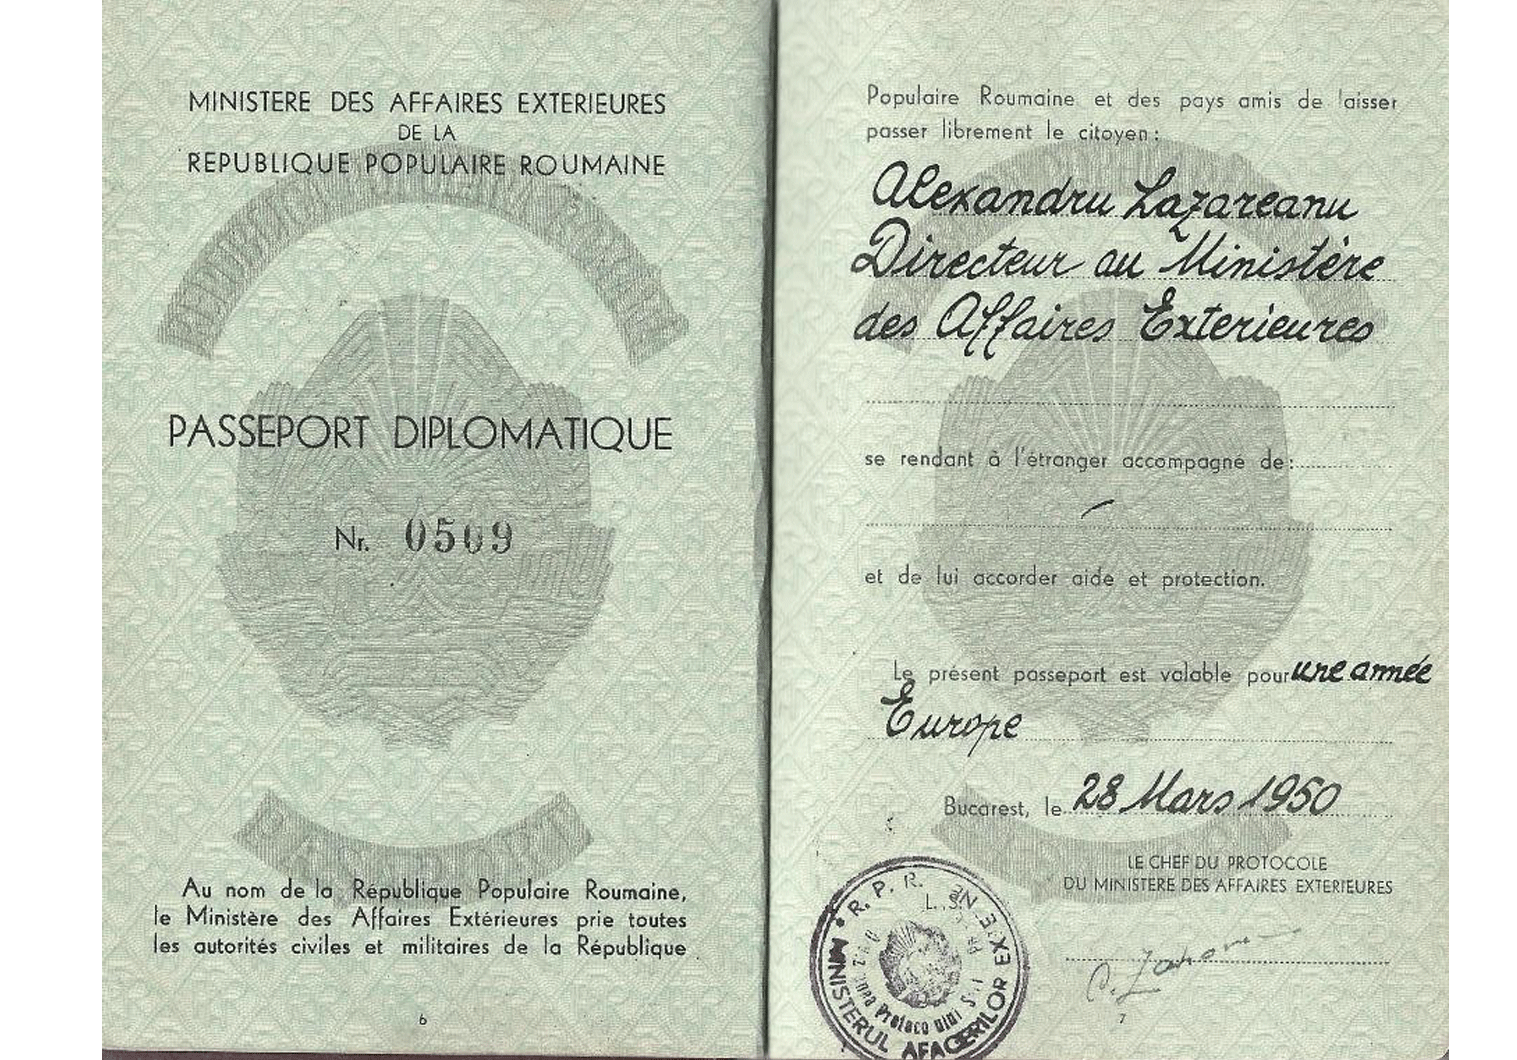 Cold War diplomatic passport